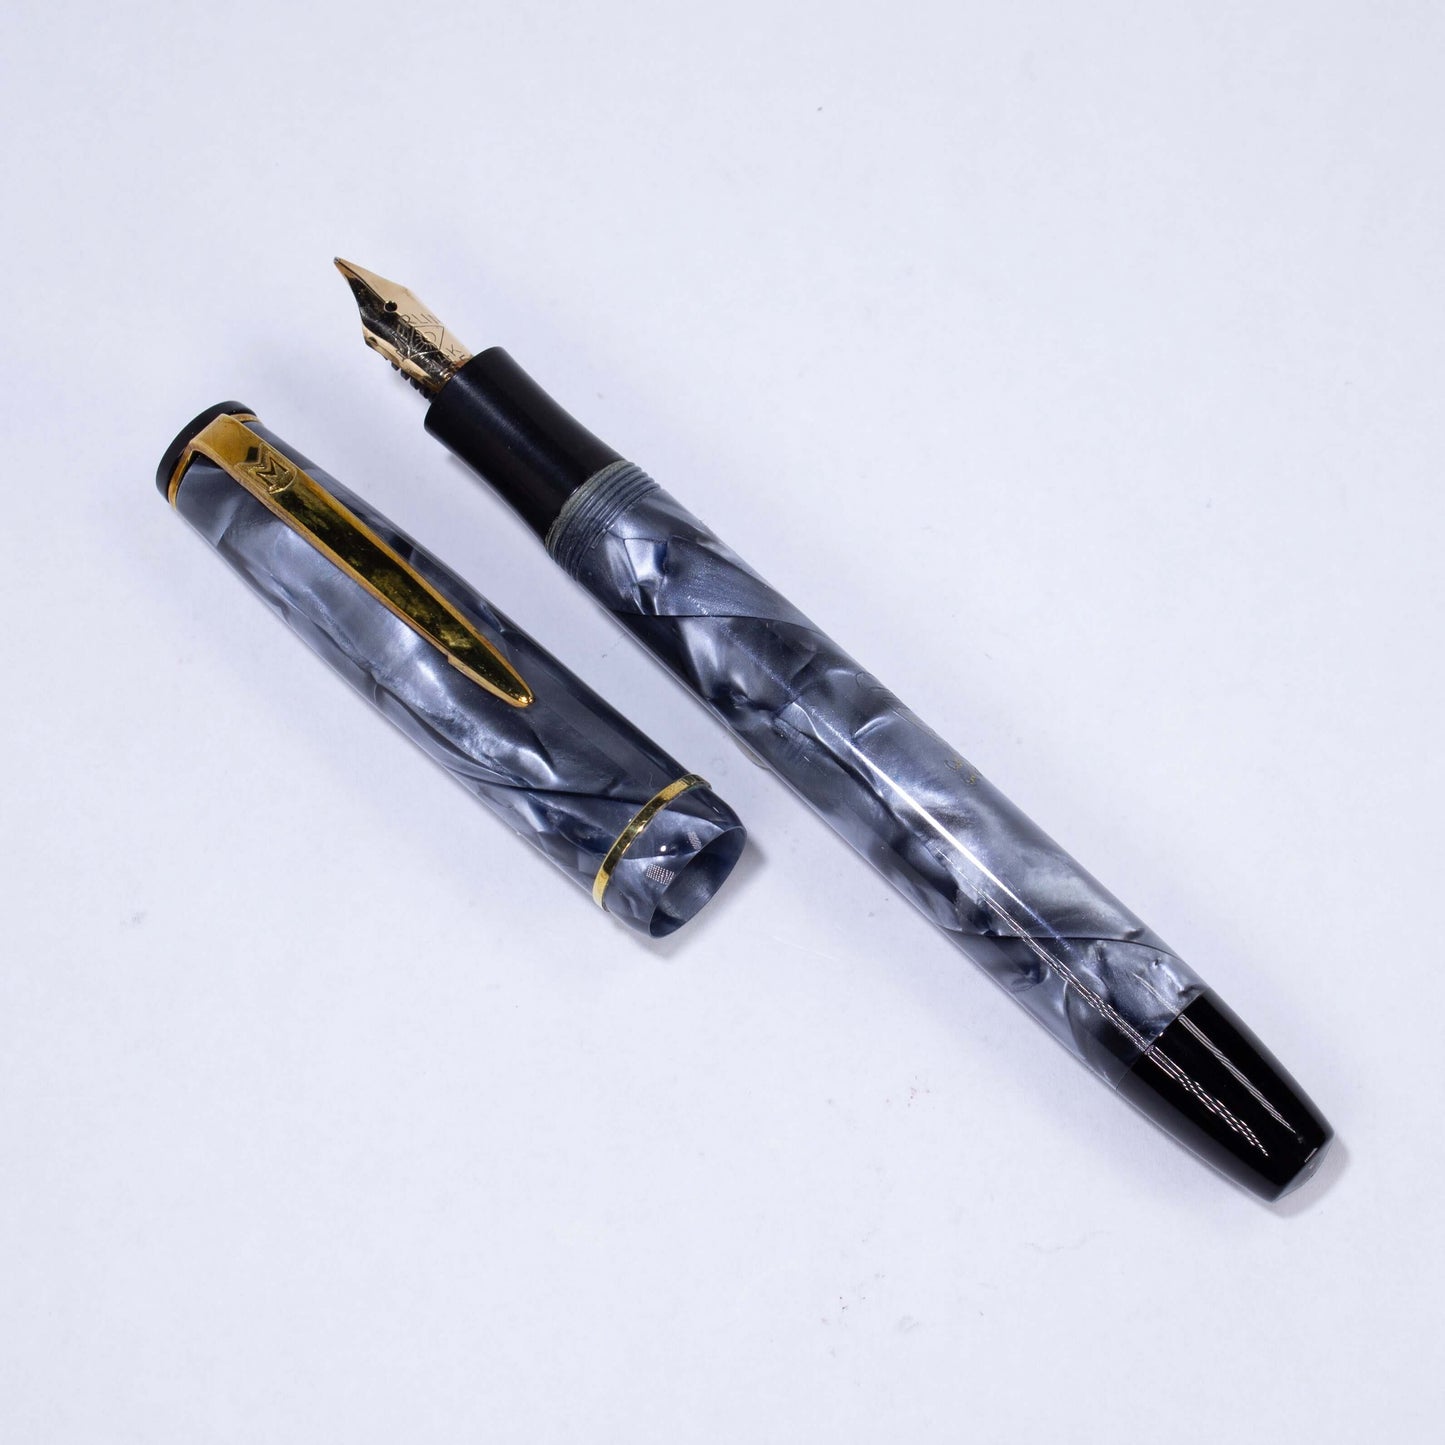 Merlin 33 Fountain Pen, Blue Marble, Gold Trim 14K Merlin Nib, Flexible, Button Filler with New Sac Installed